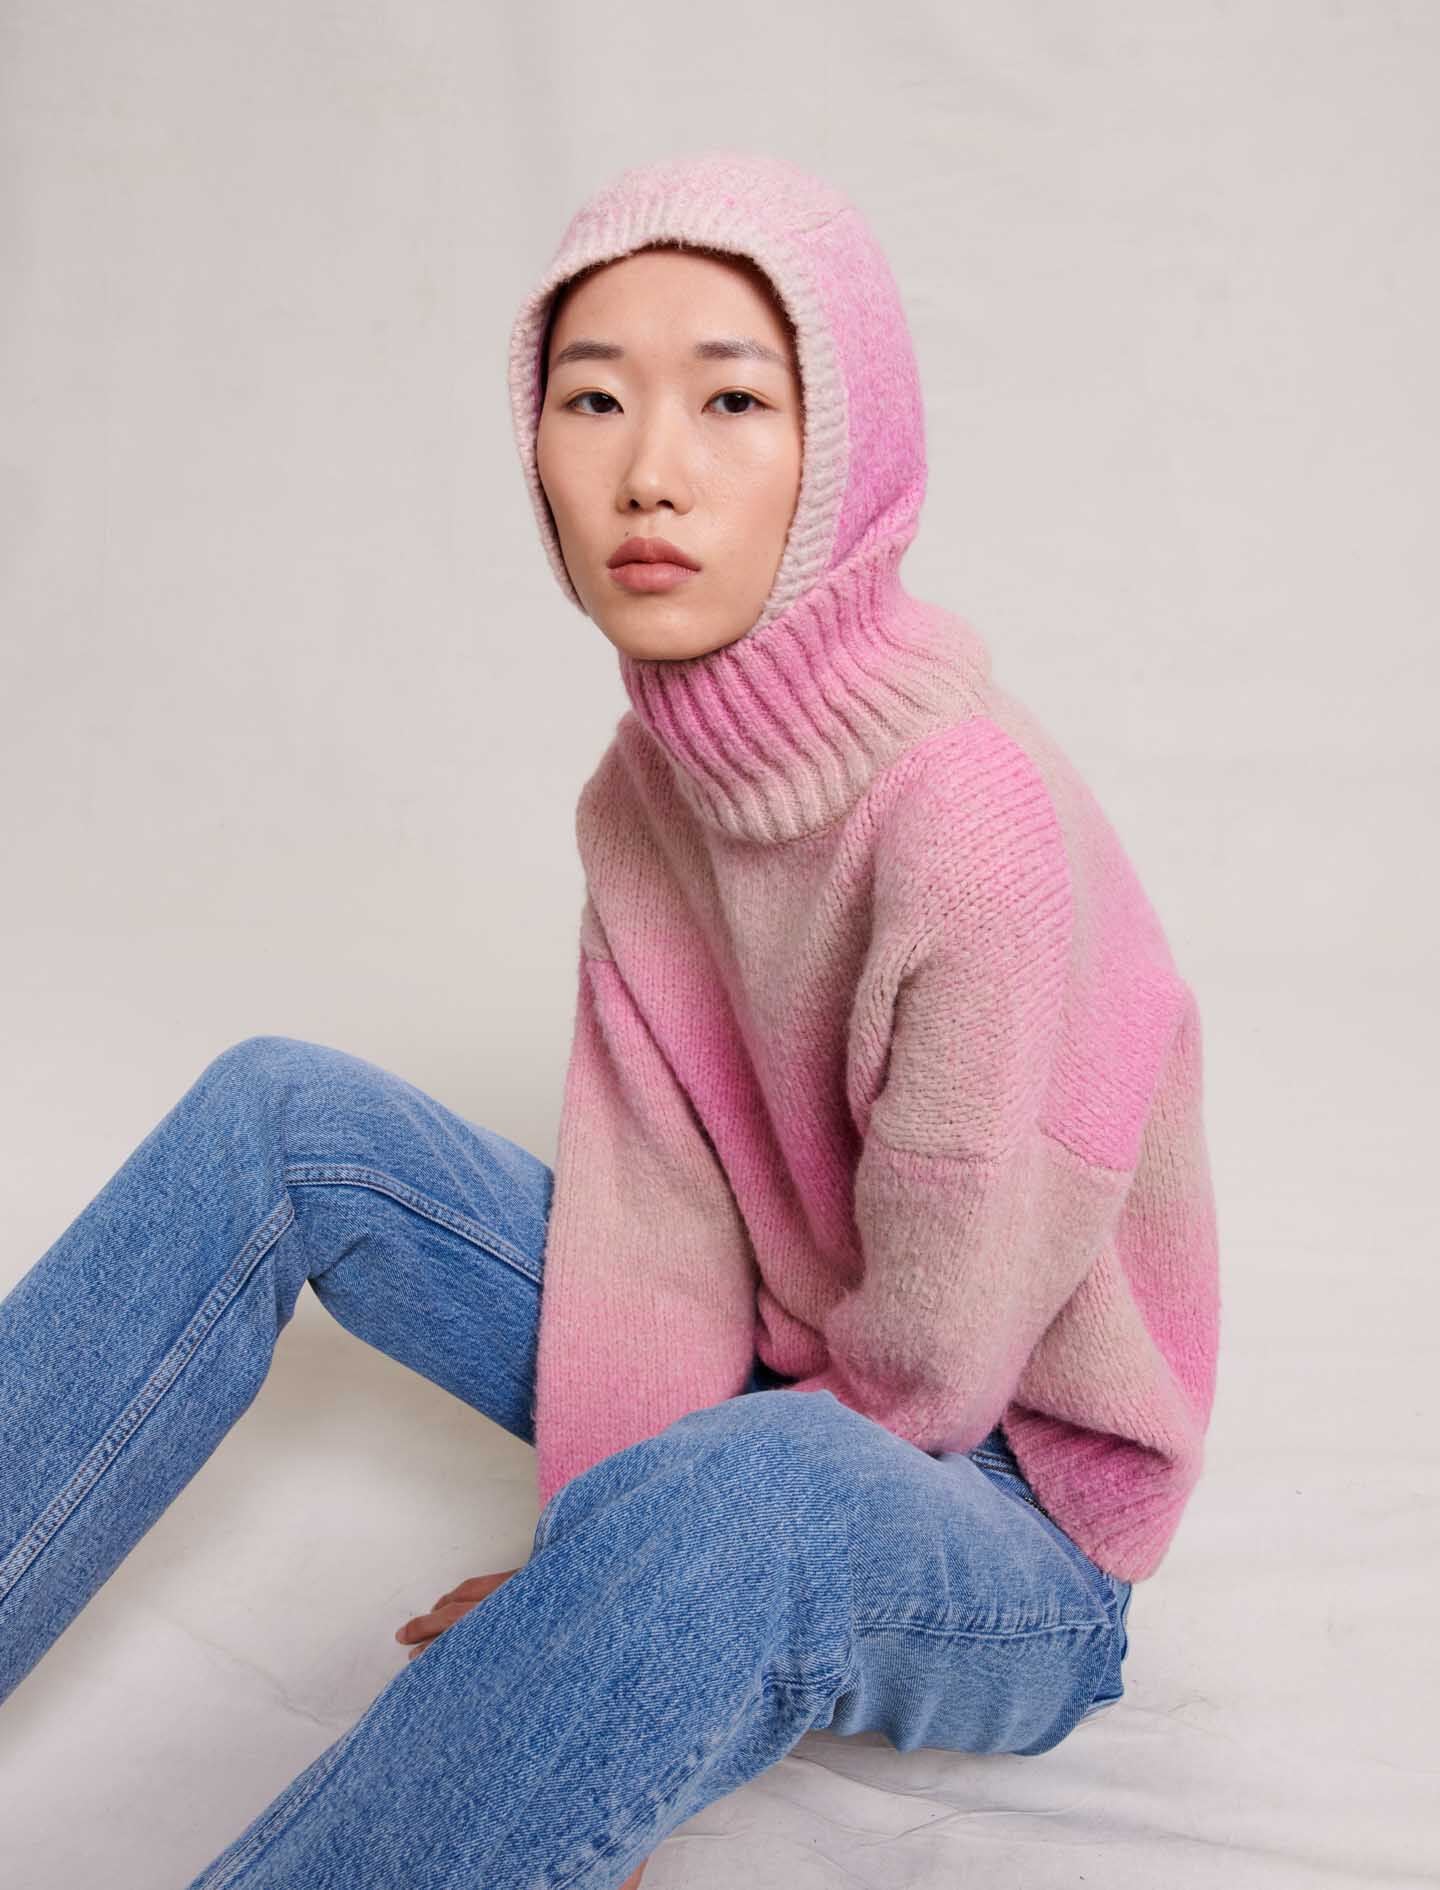 Pink-gradient knit jumper